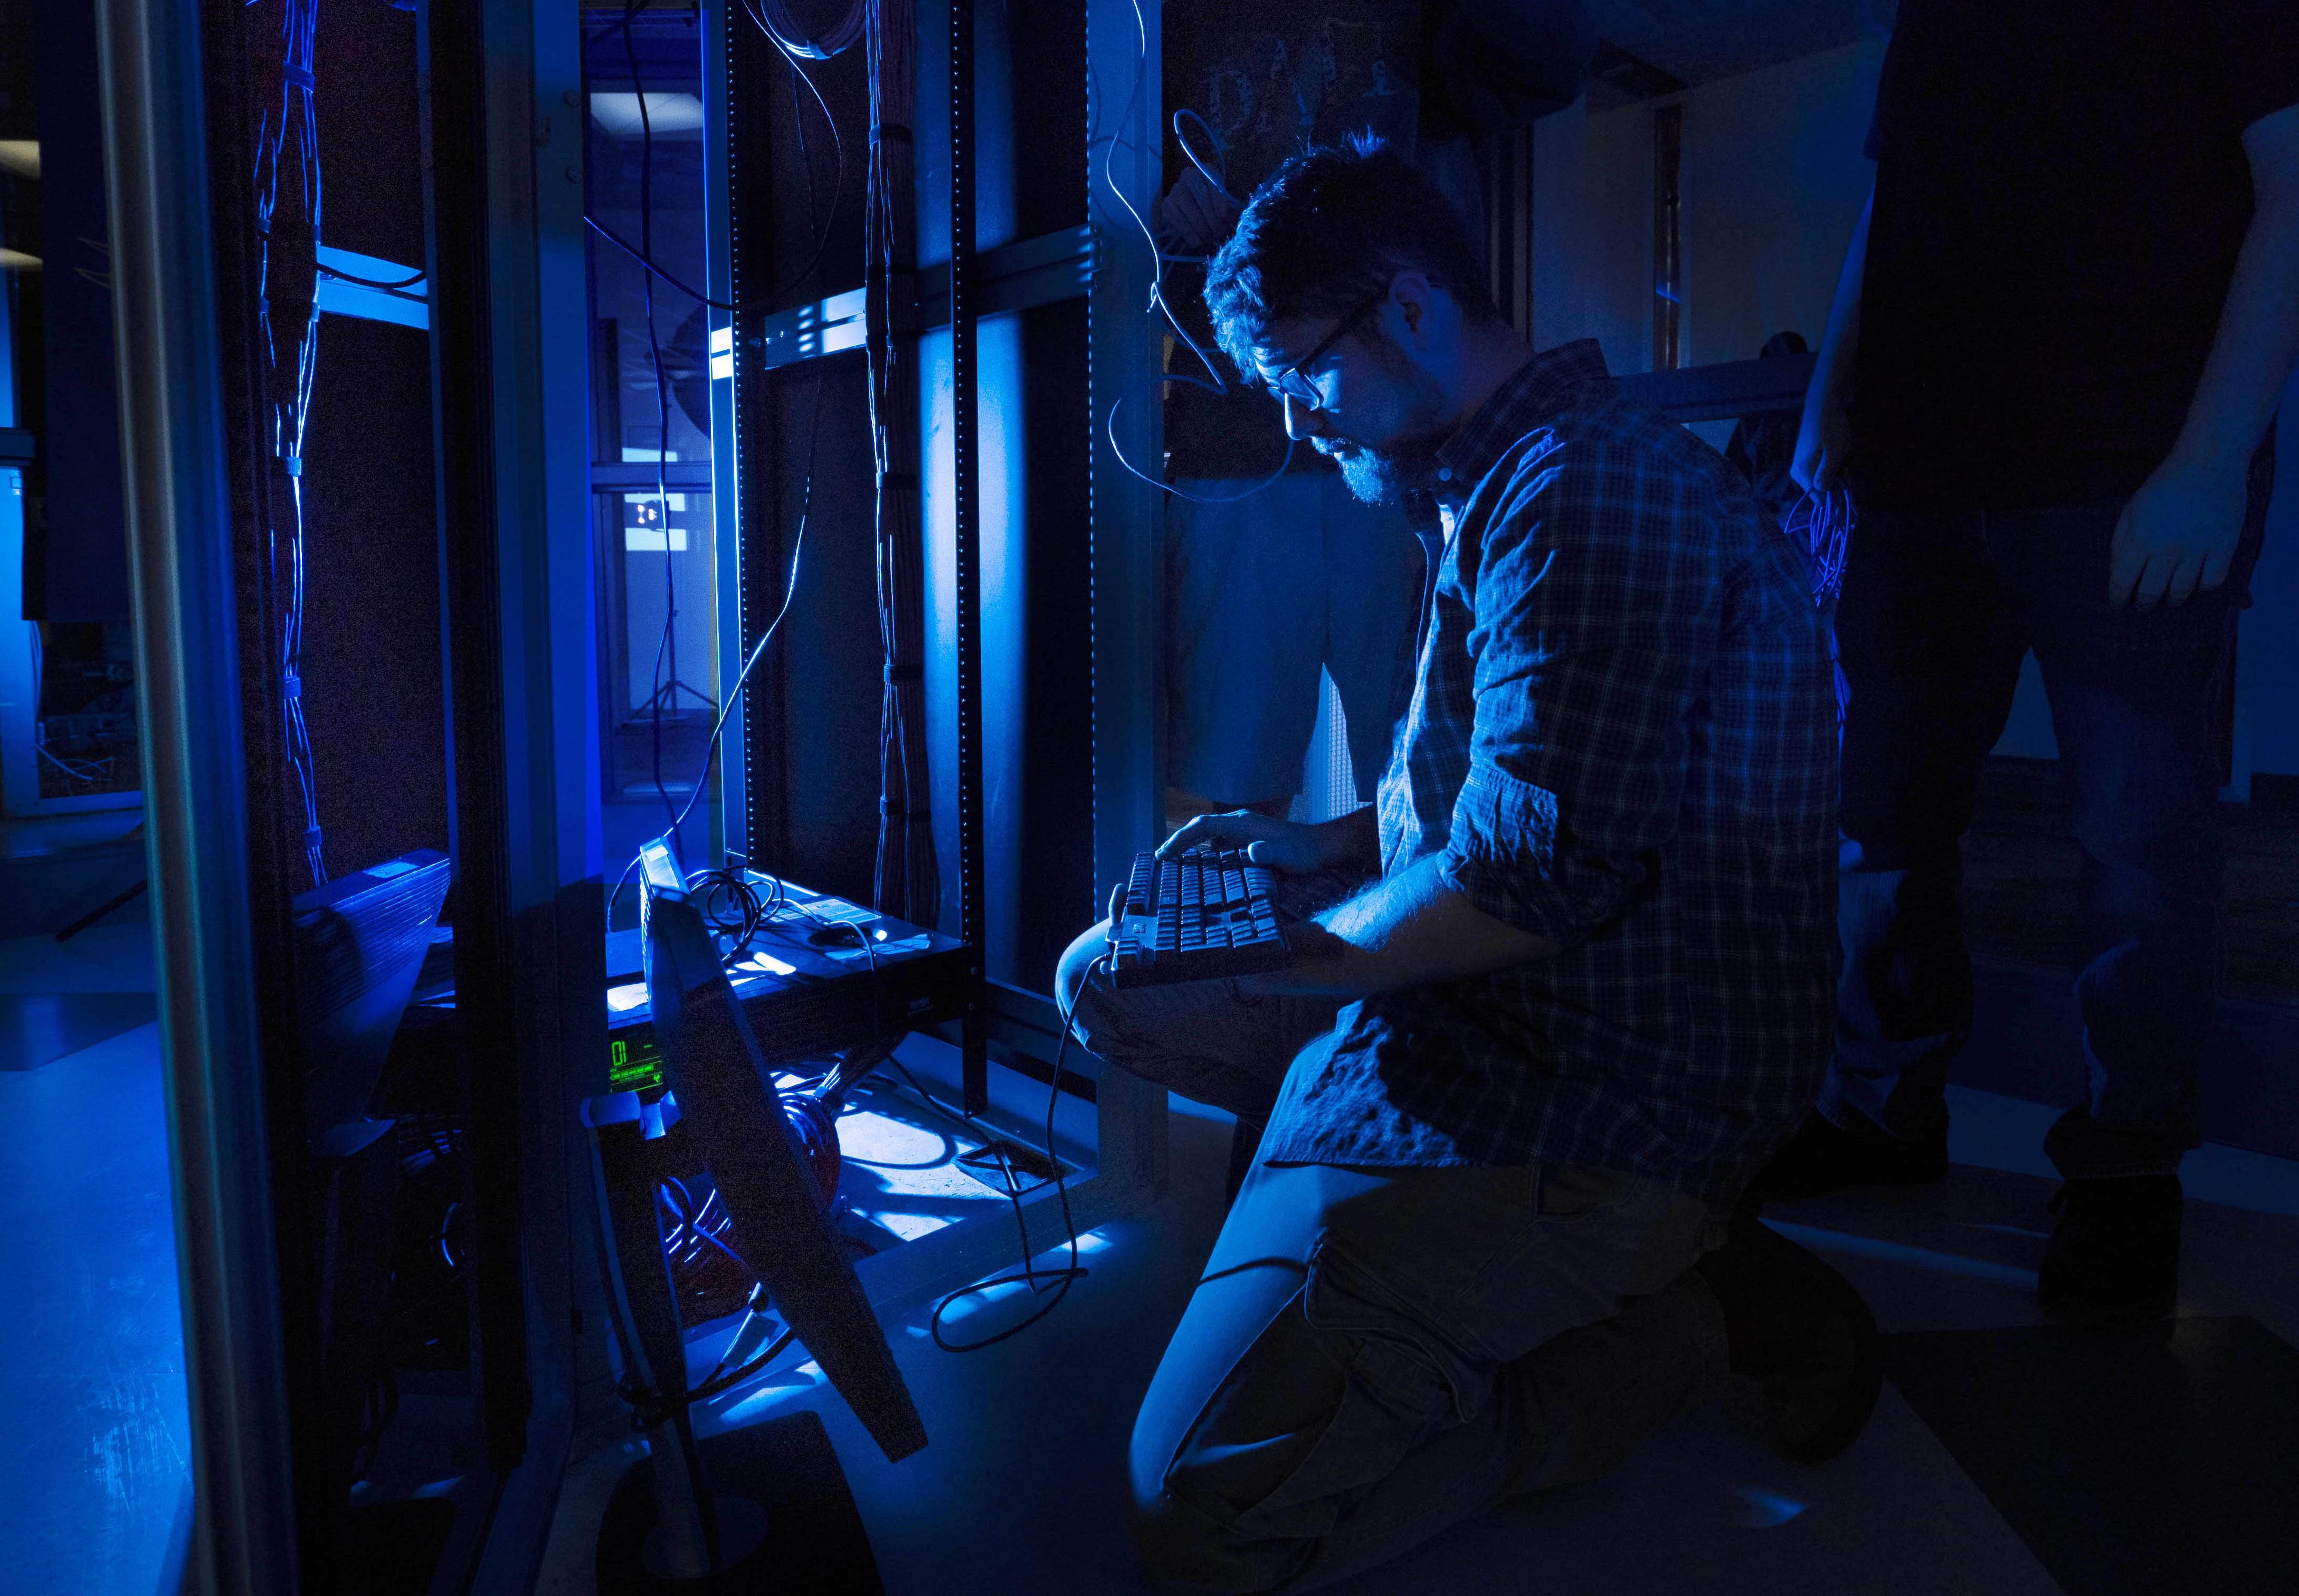 VinU student networking in a dark room.